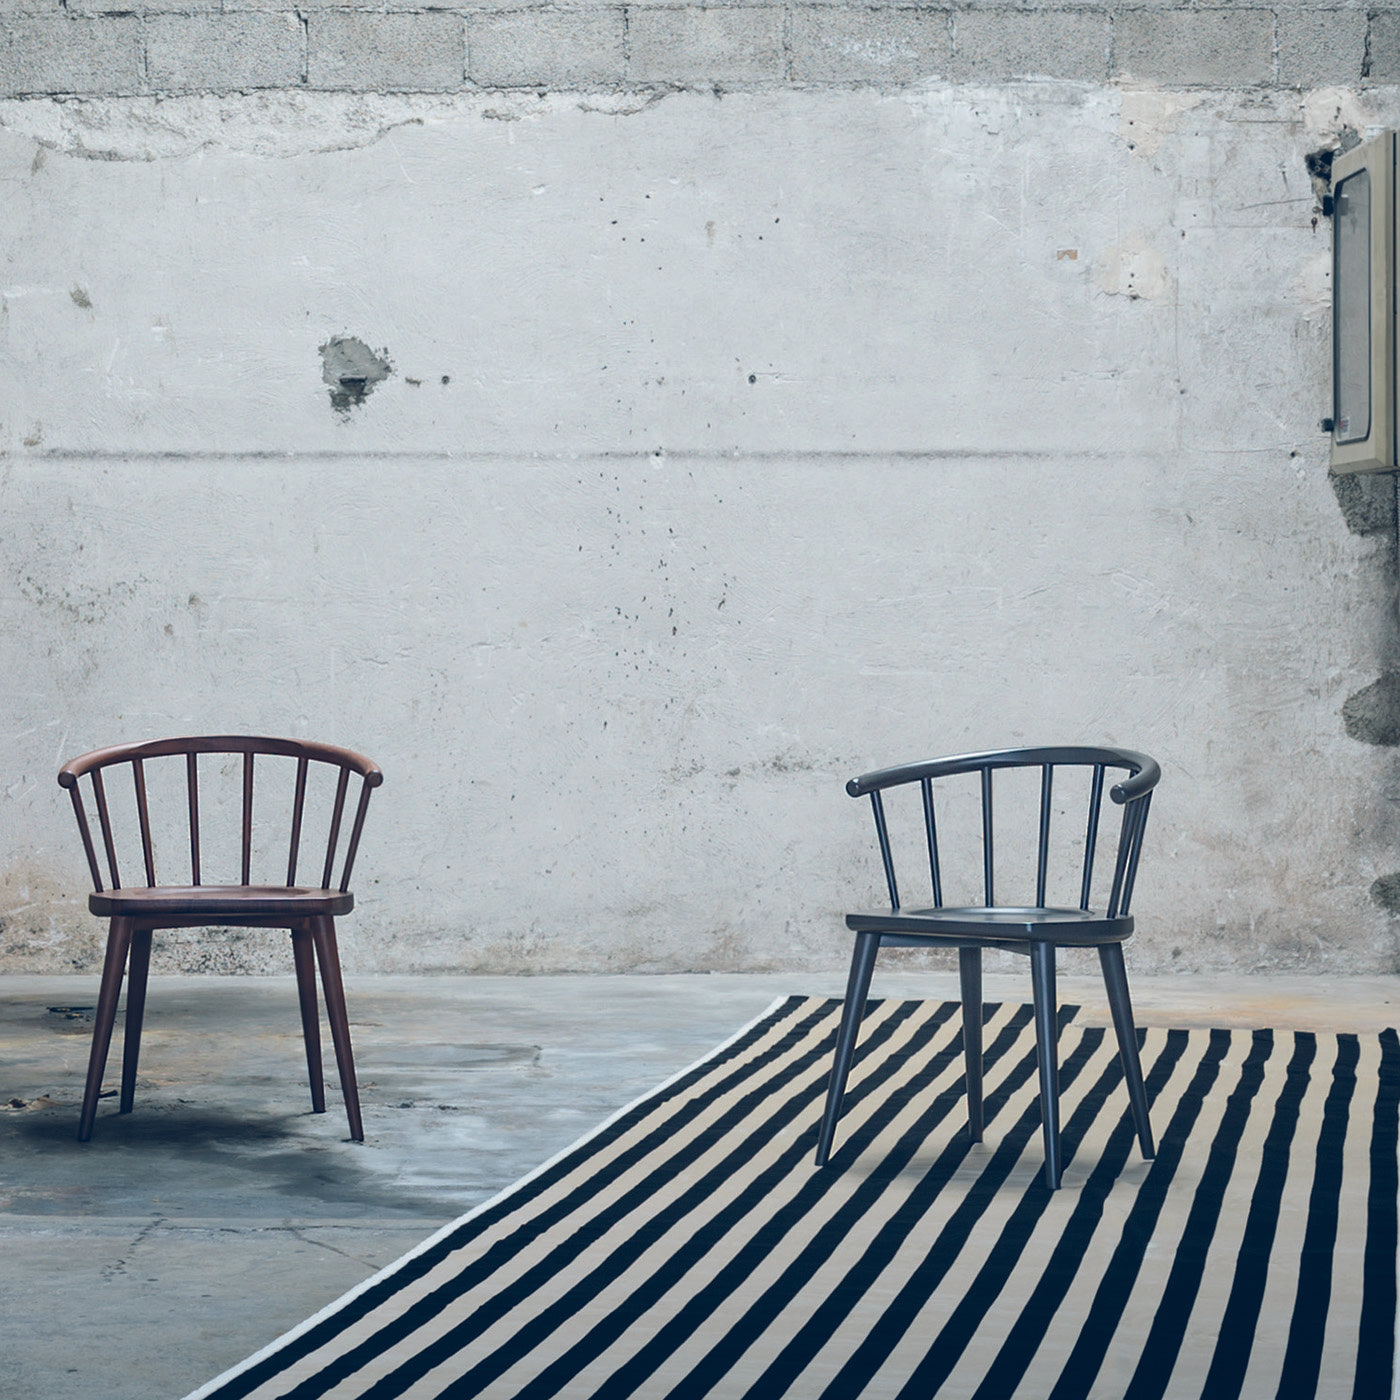 W. Chair by Fabrizio Gallinaro #2 - Alternative view 2